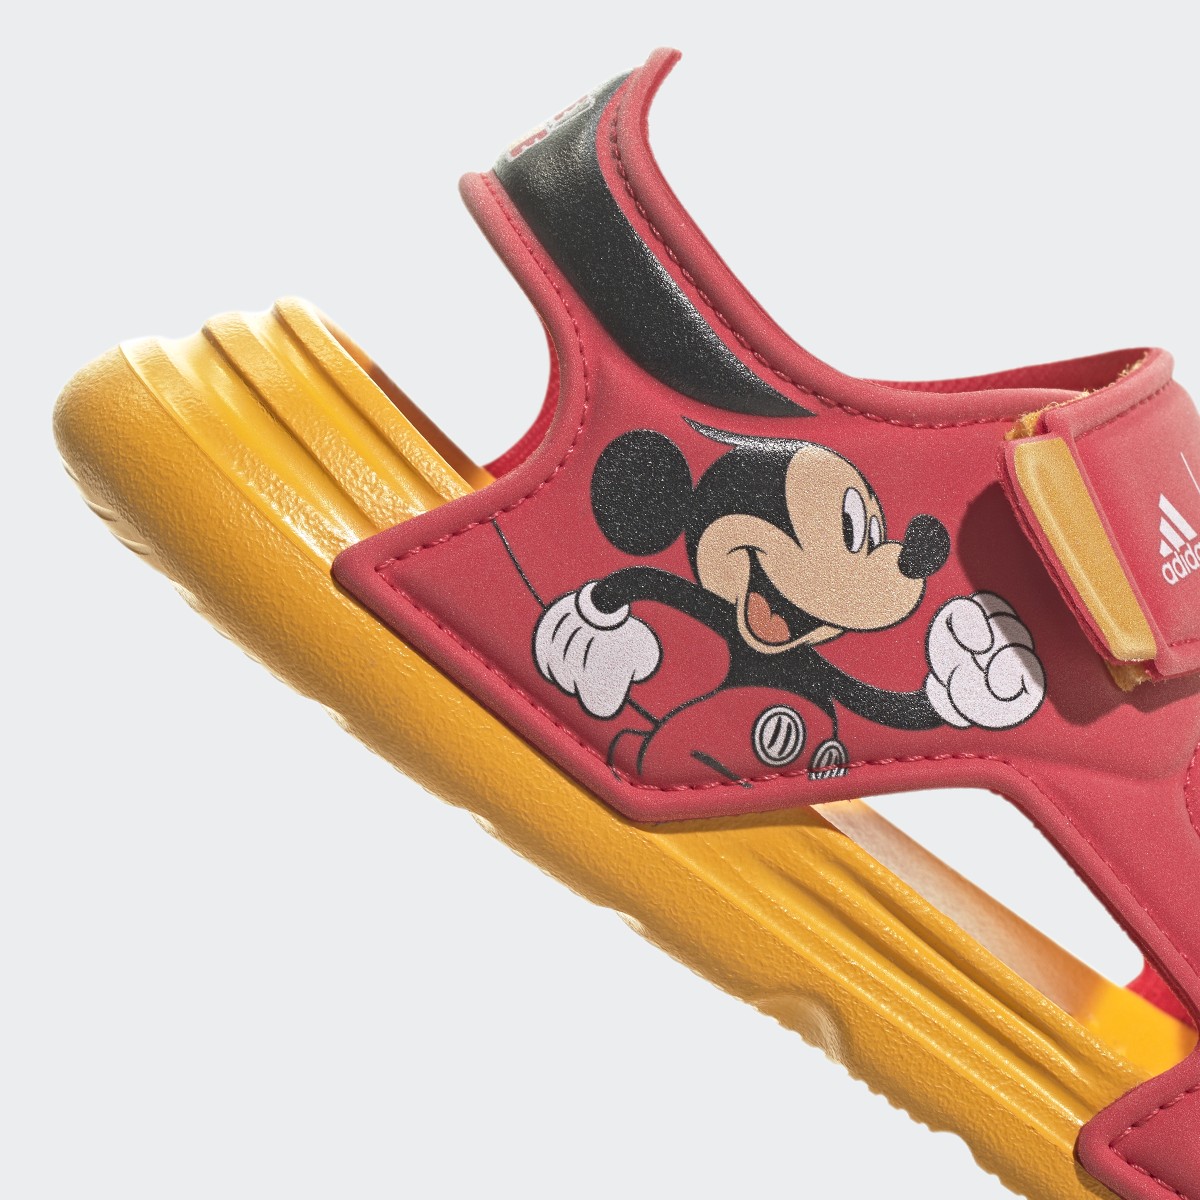 Adidas x Disney Mickey Mouse AltaSwim Sandals. 9